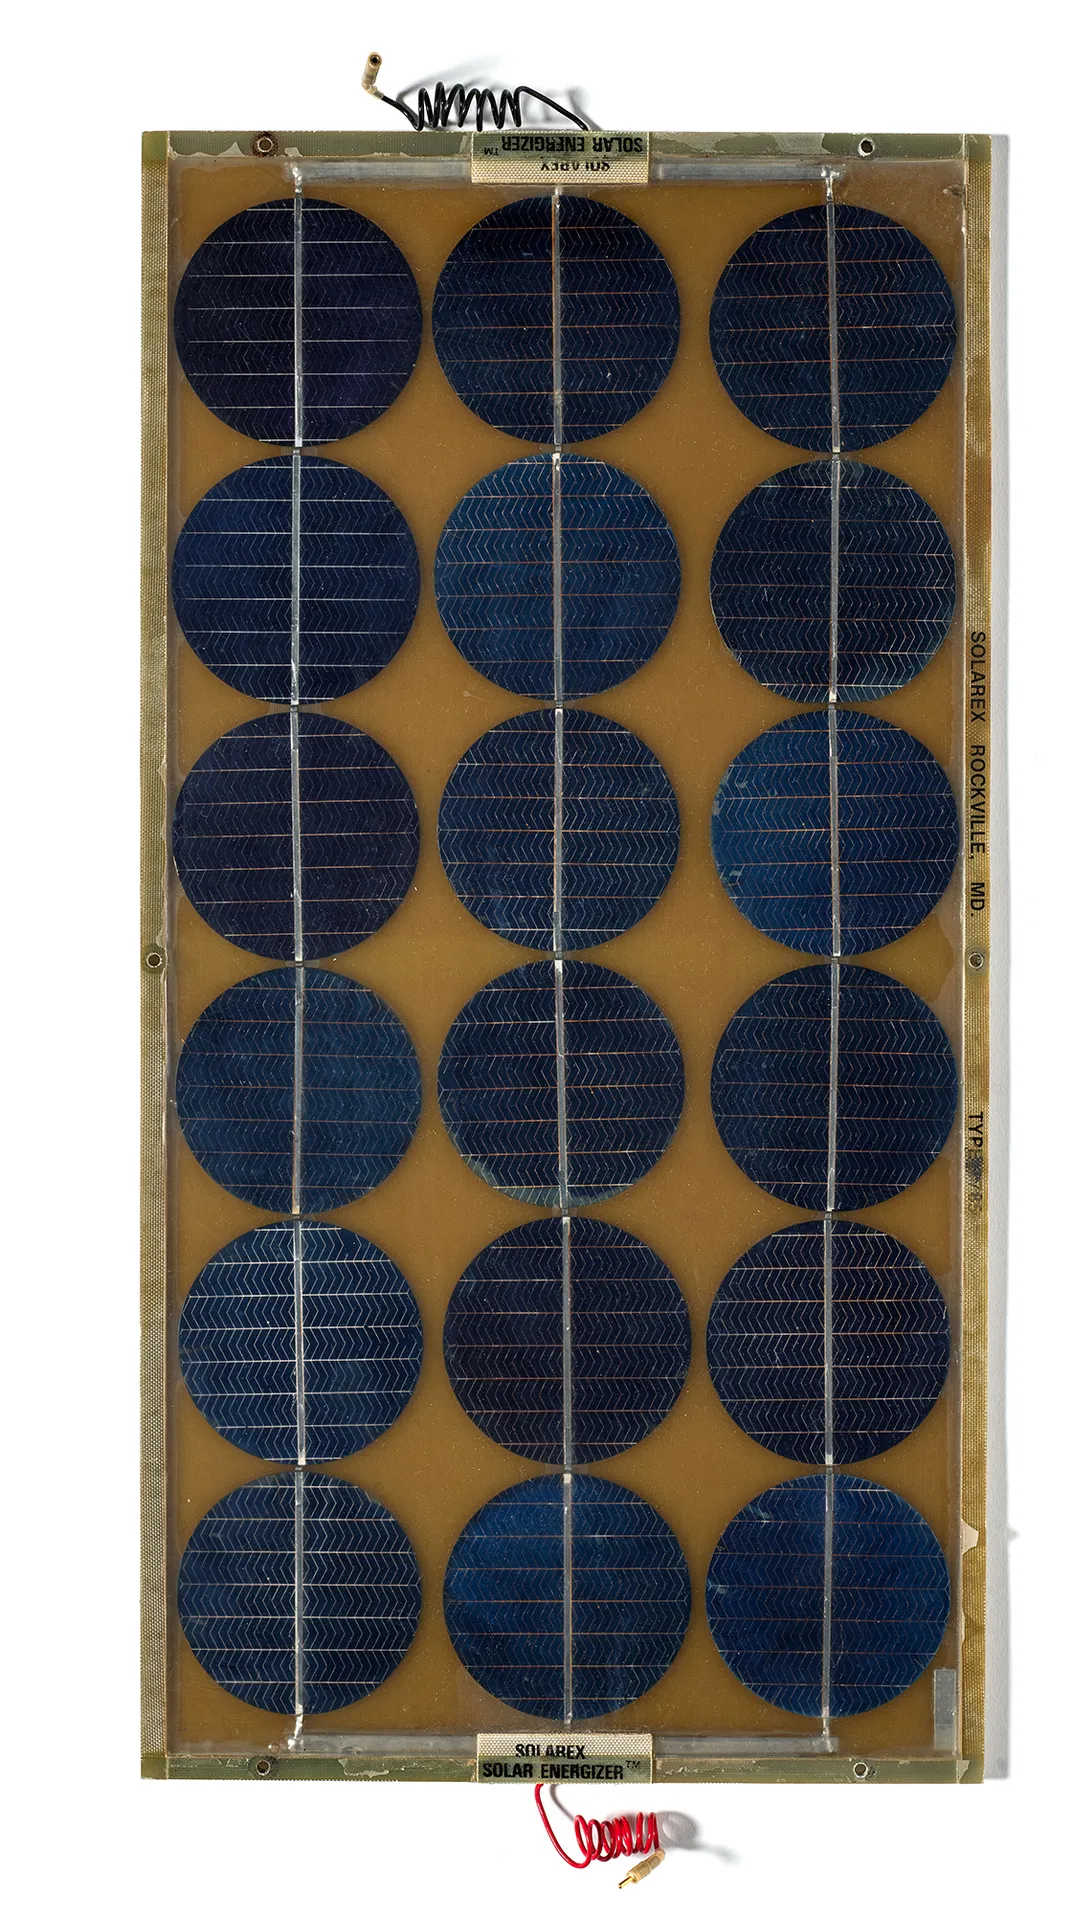 Solarex “Solar Energizer” solar panel